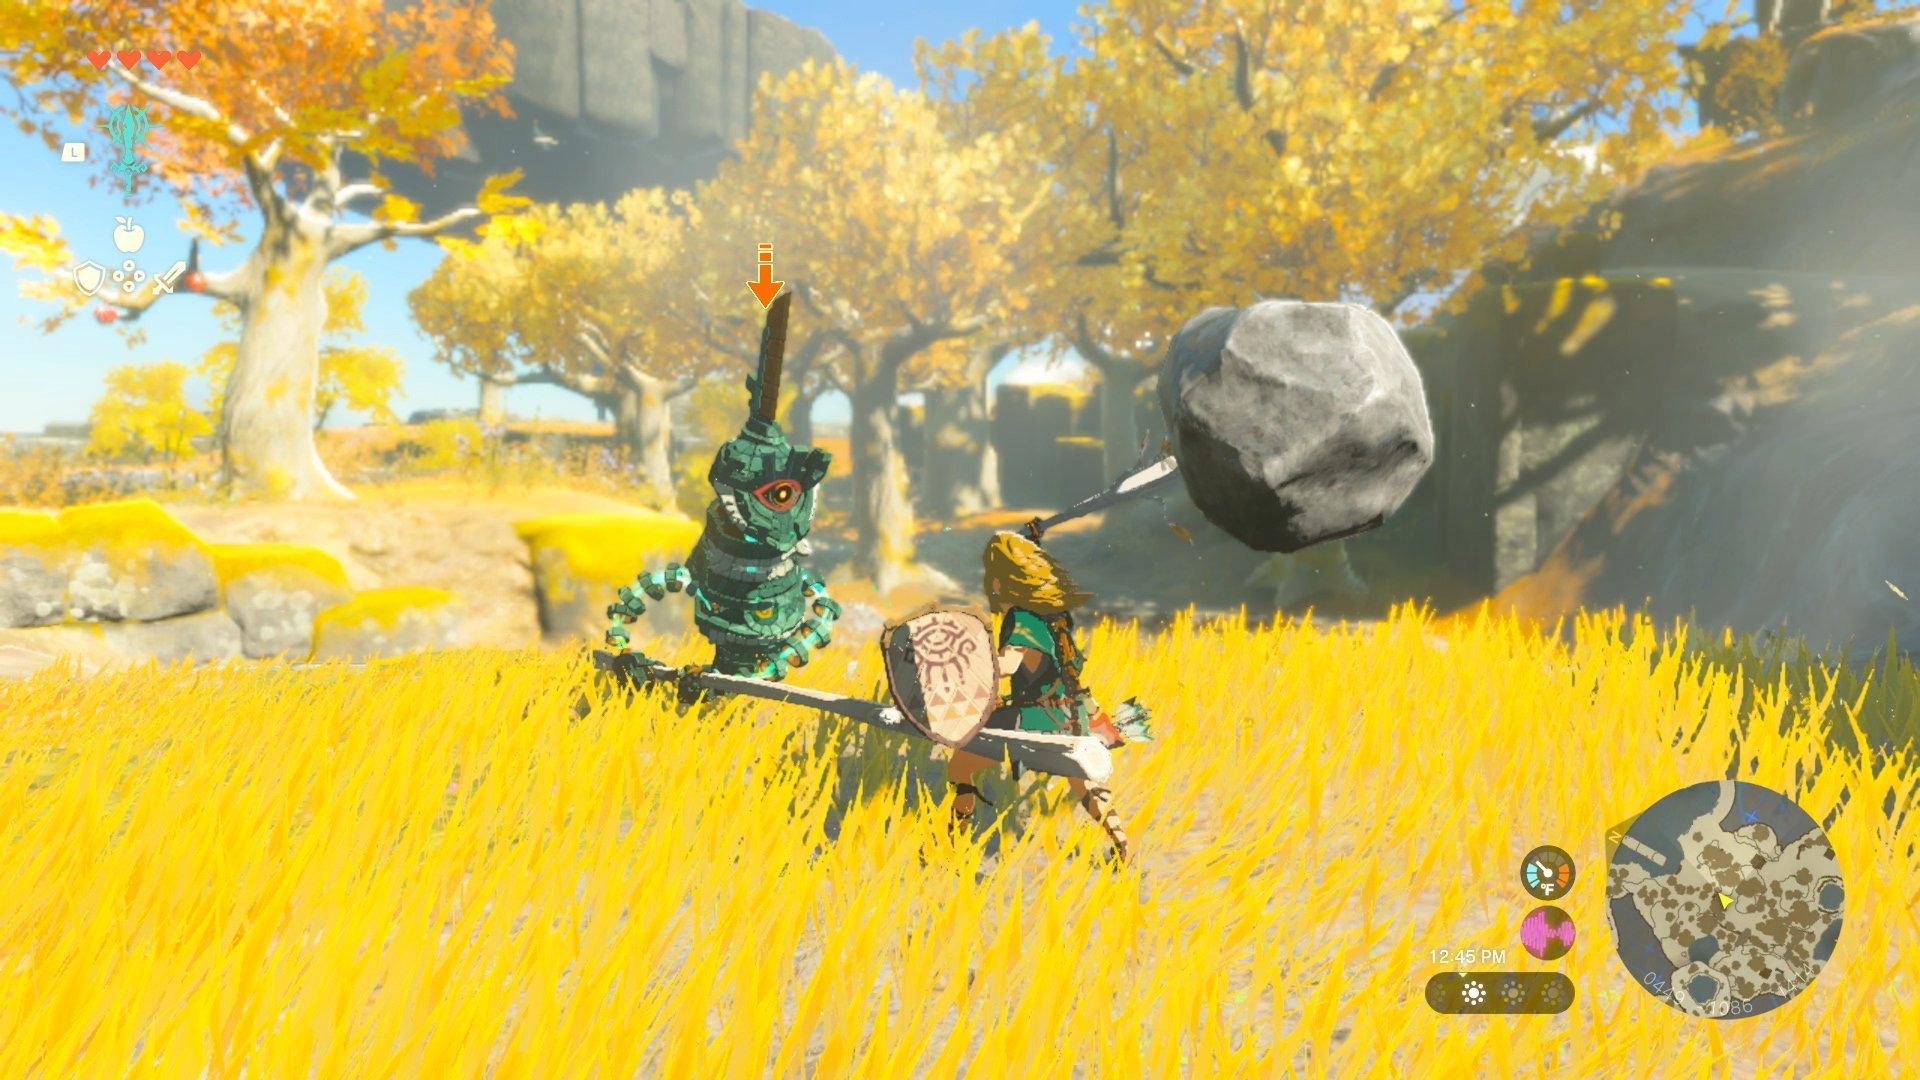 Trade In The Legend of Zelda: Tears of the Kingdom - Nintendo Switch